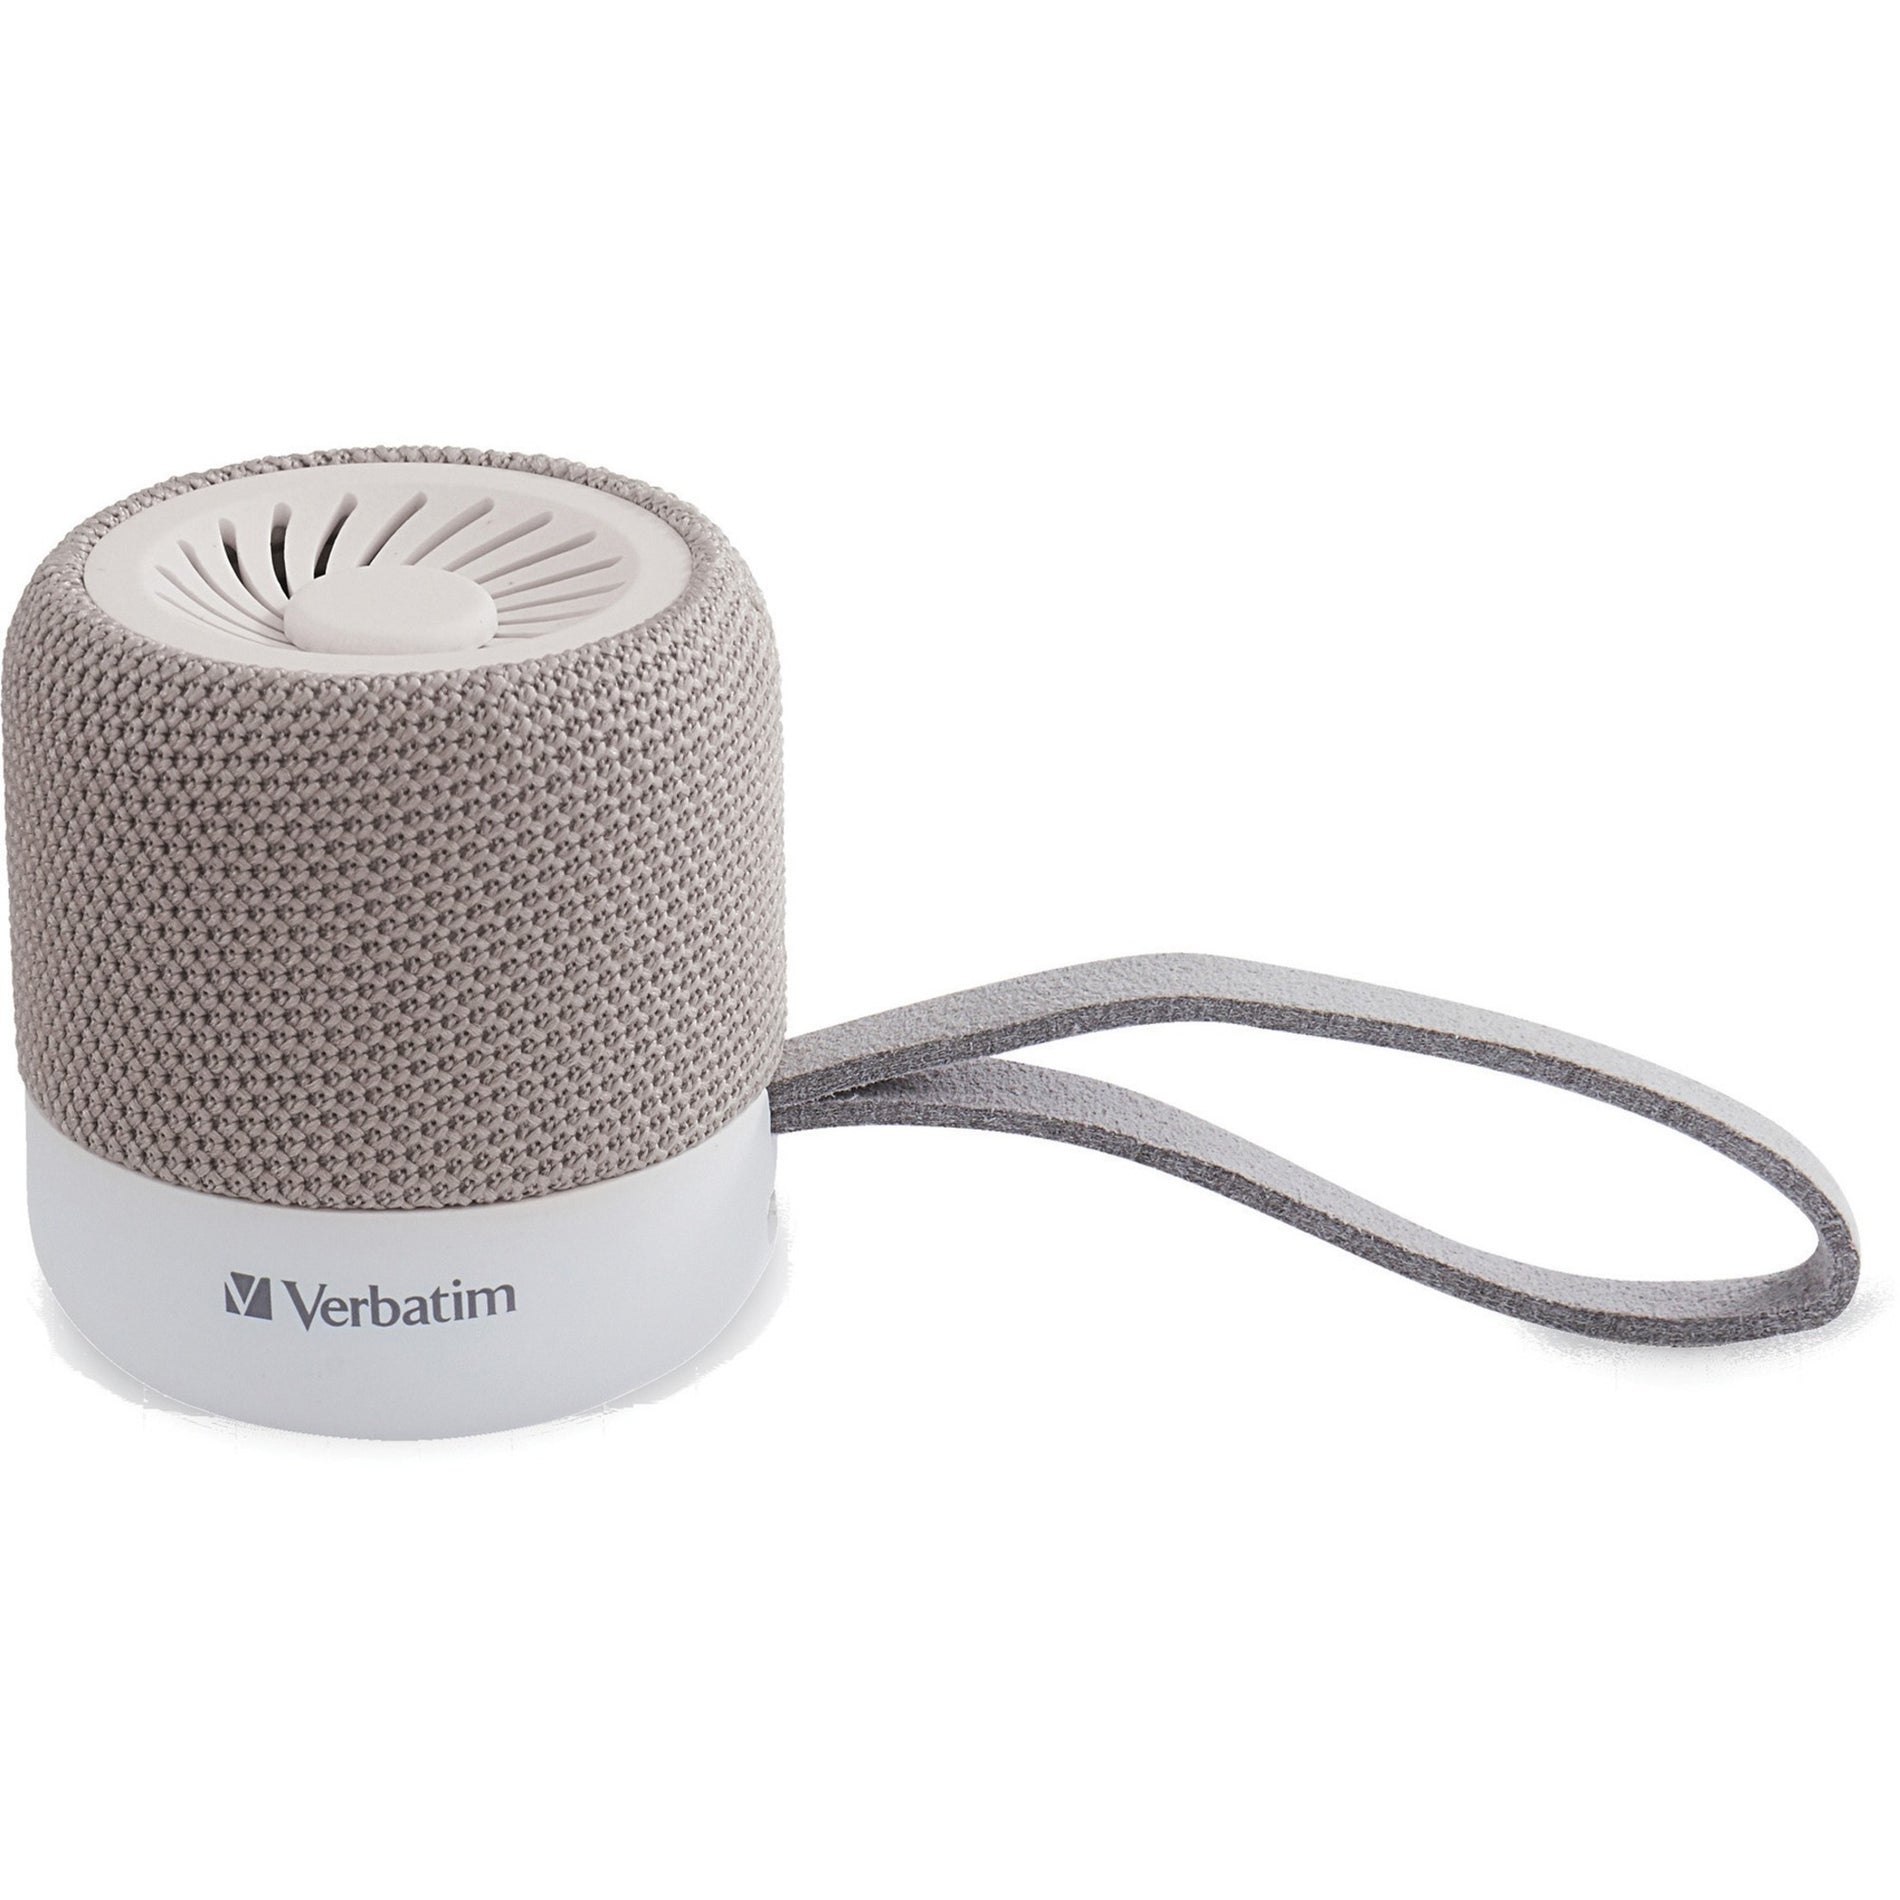 Verbatim 70232 Wireless Mini Bluetooth Speaker - White, TrueWireless Stereo, Rechargeable Battery